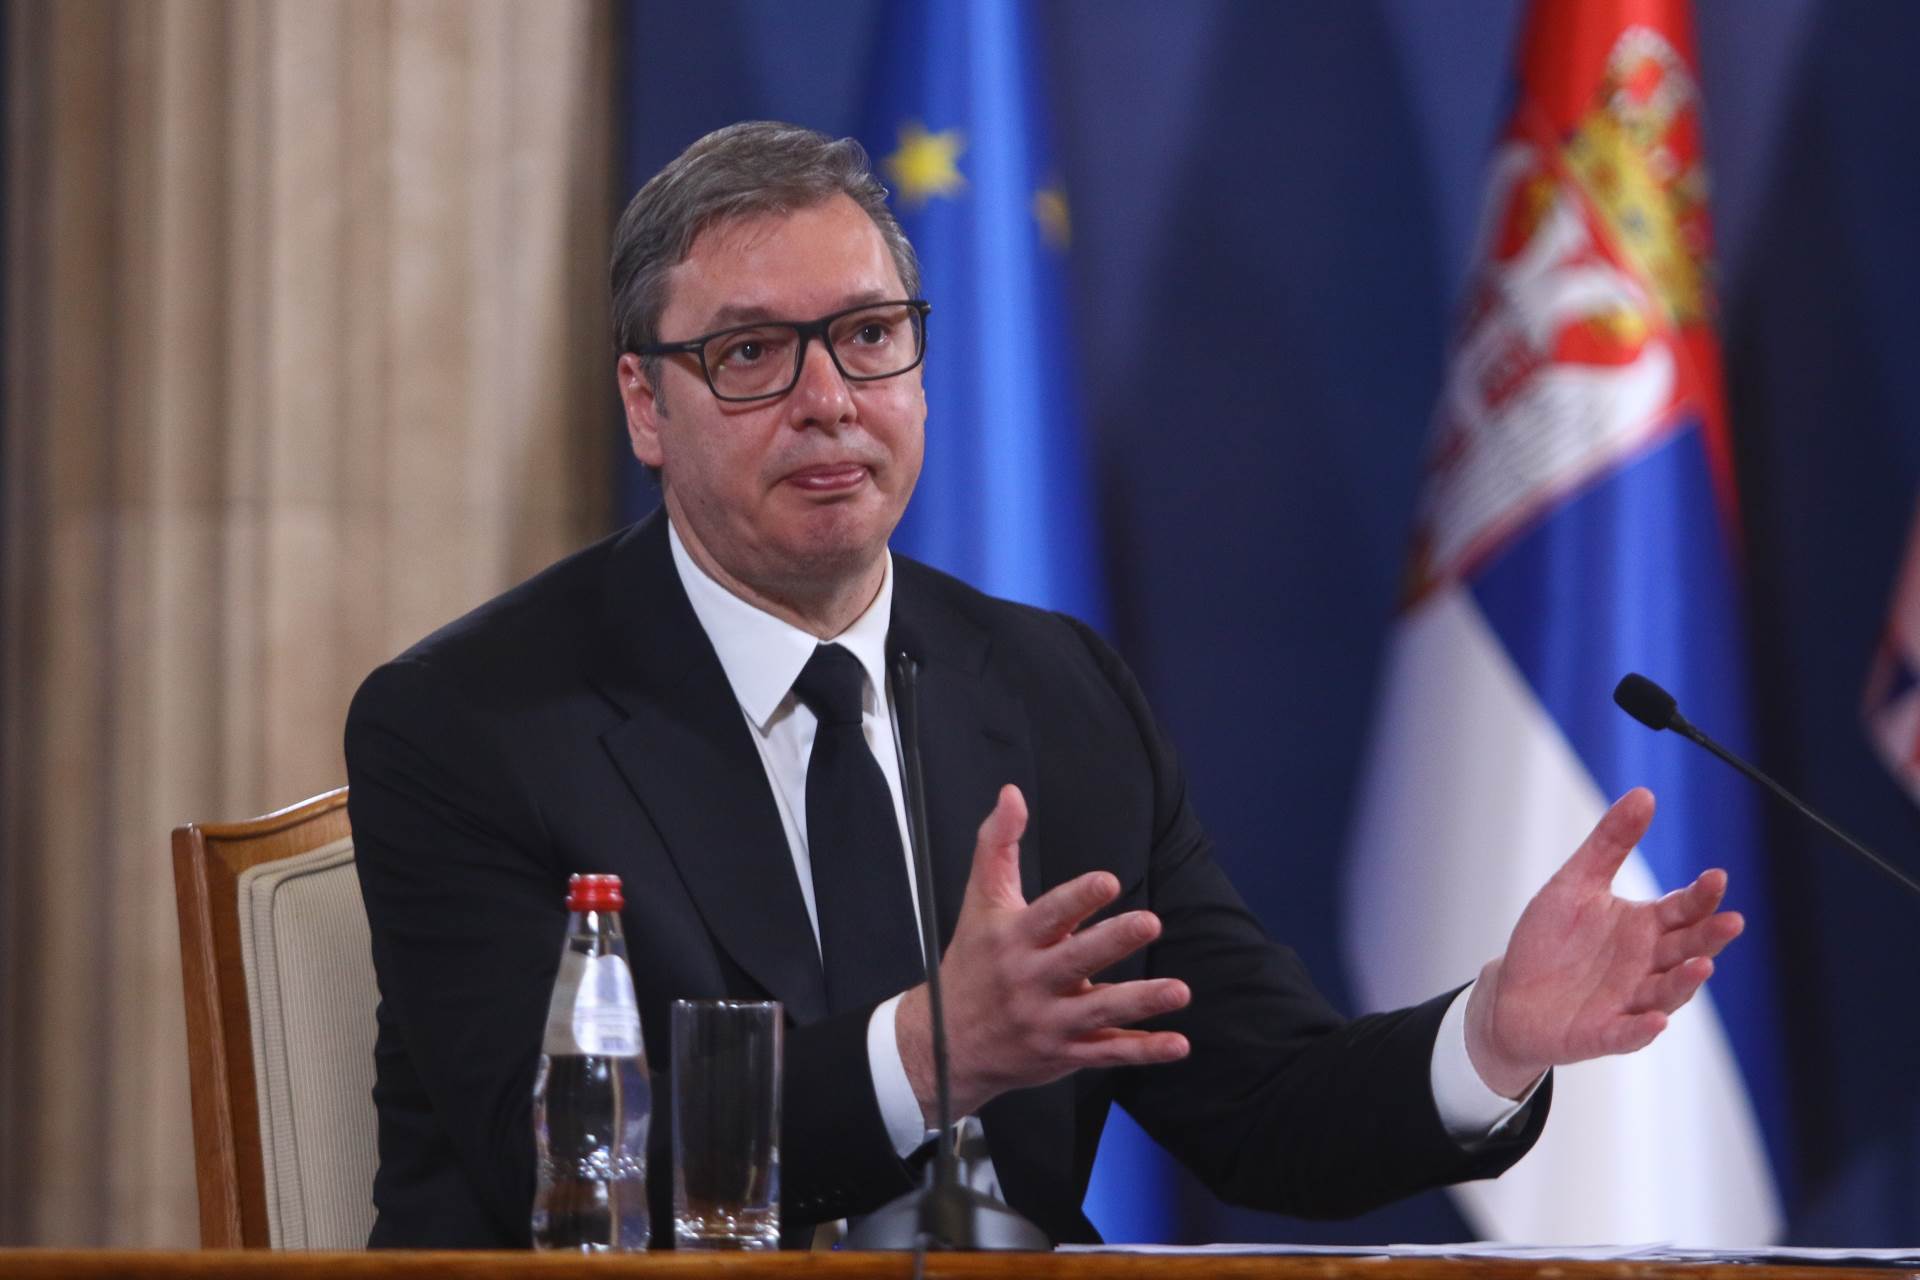  Aleksandar Vučić pres konferencija nakon masakra u školi 